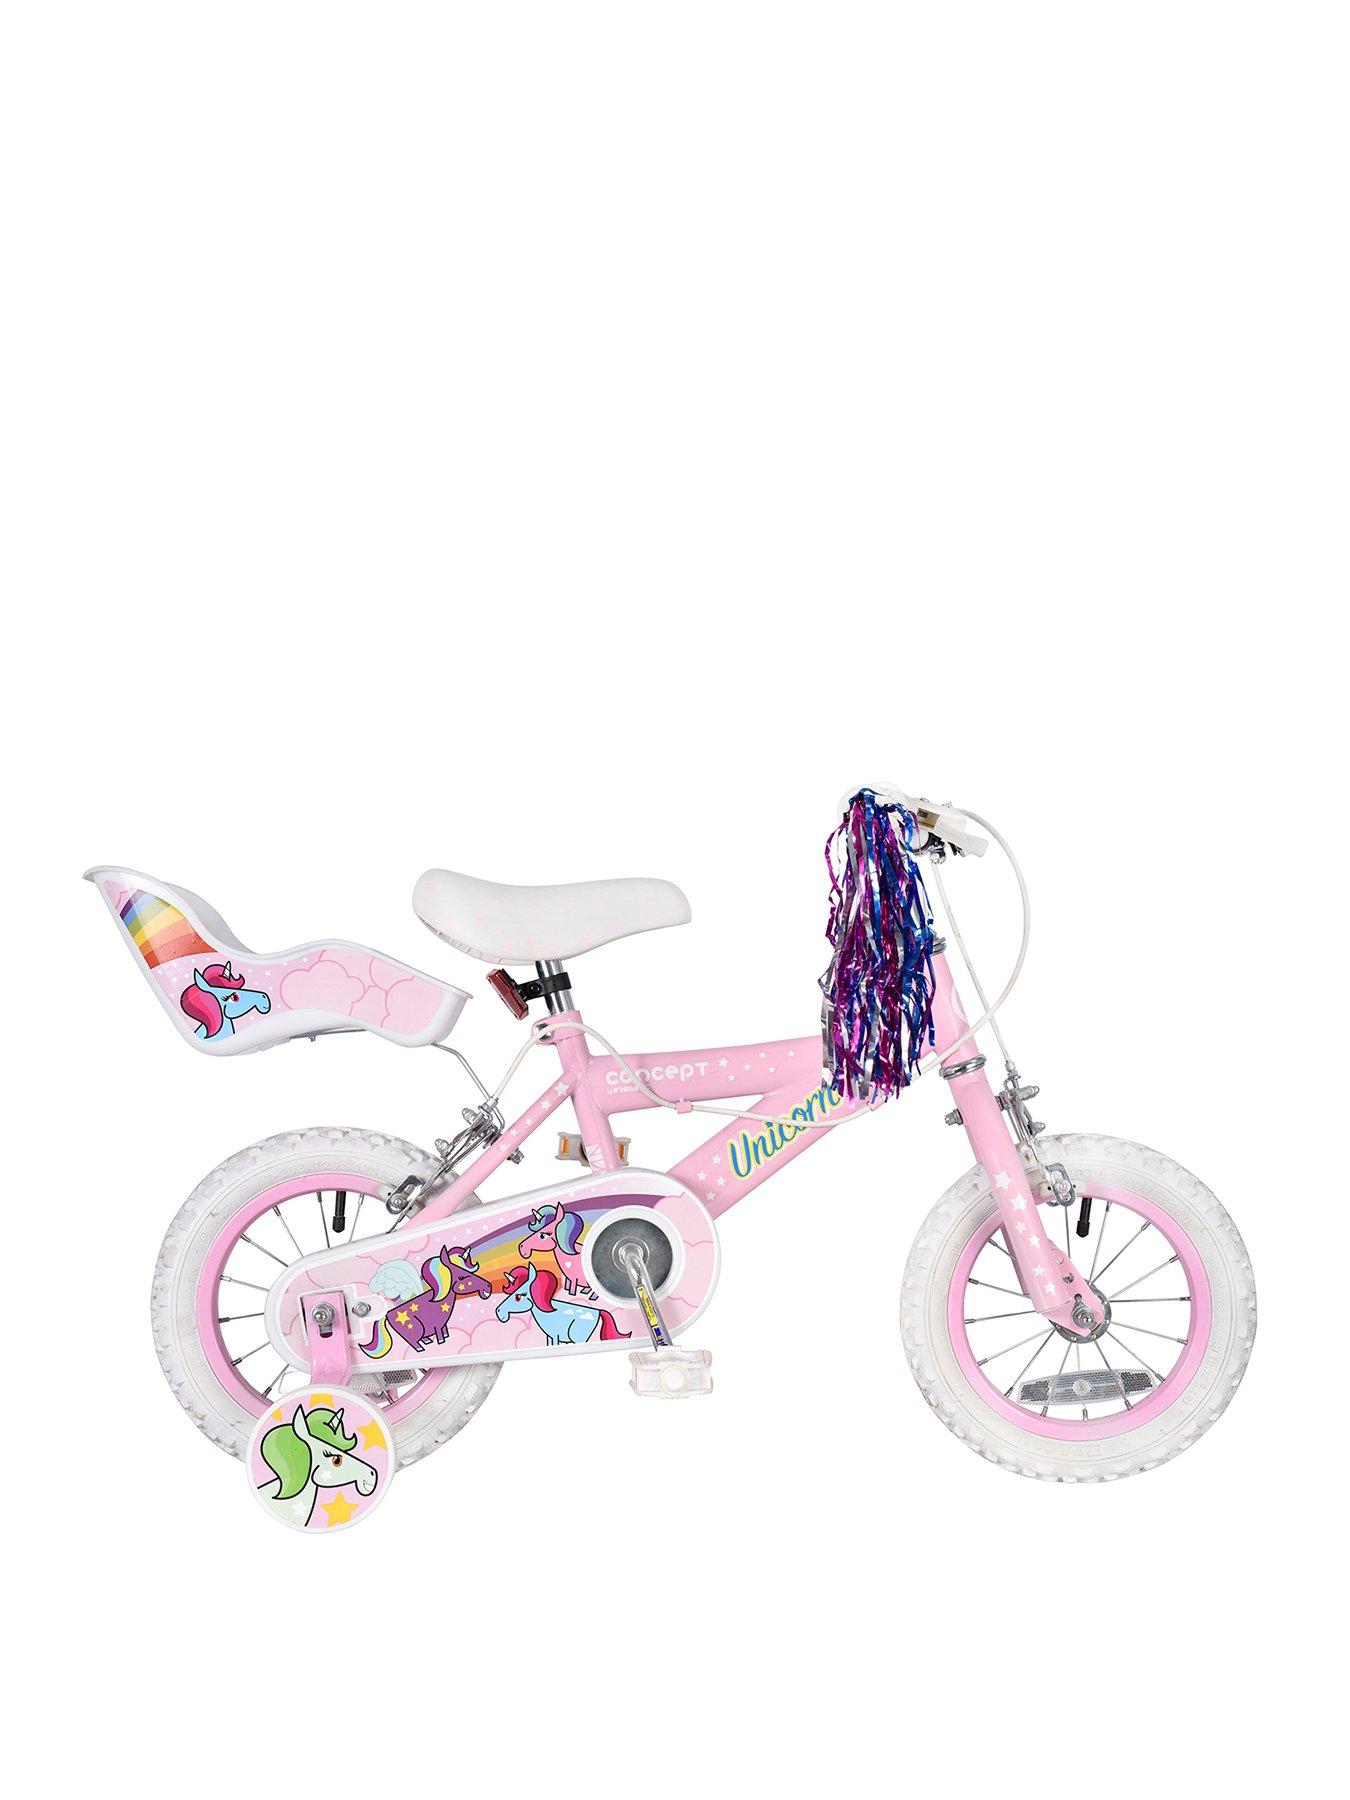 16 inch wheel girls bike